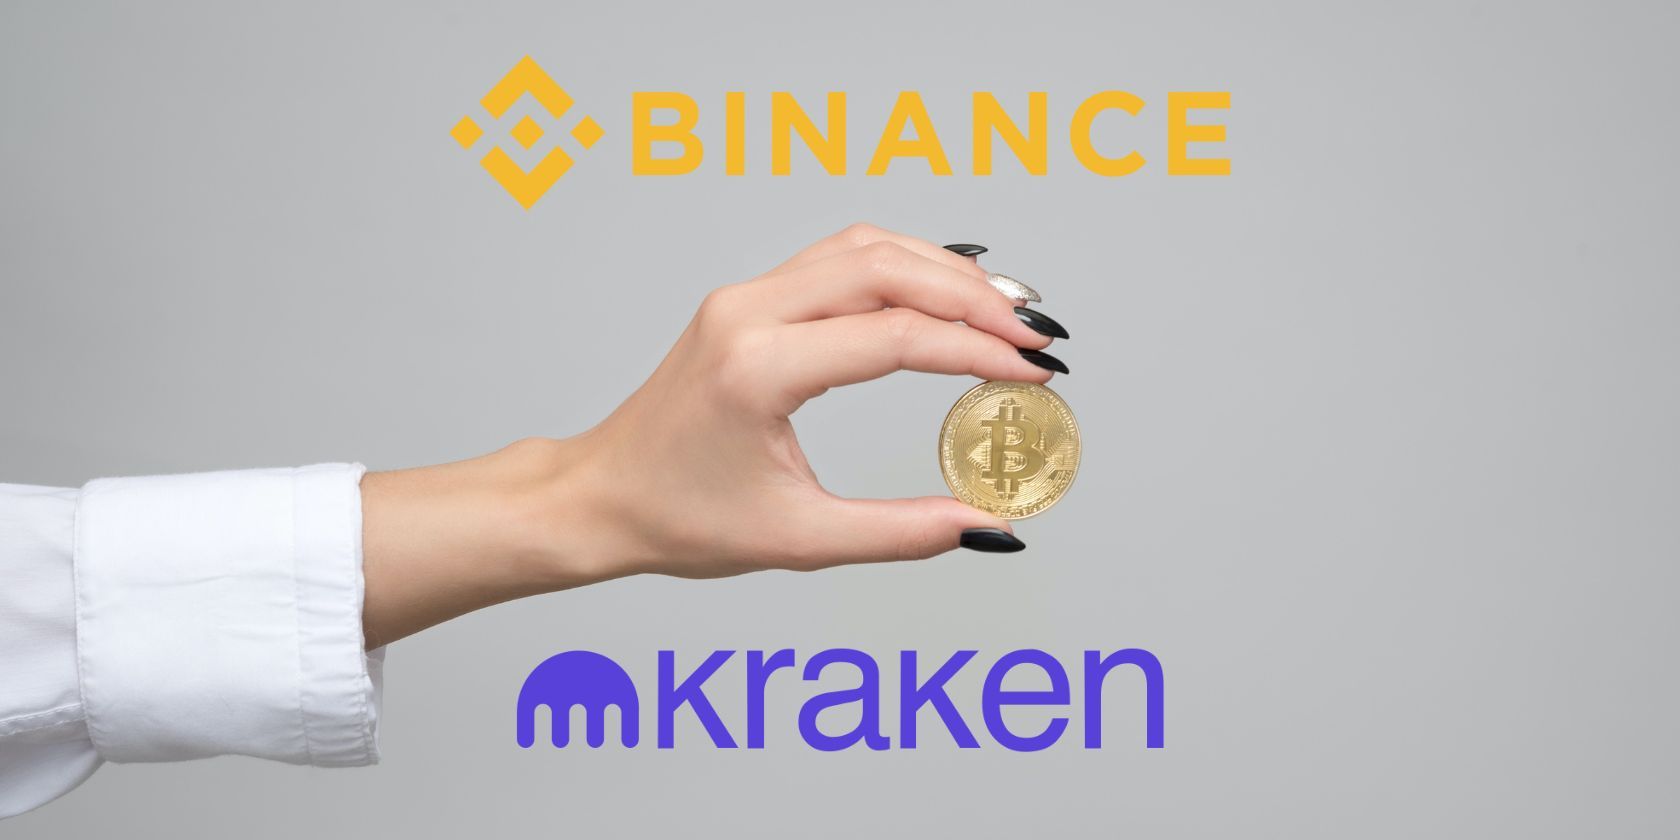 person holding bitcoin between kraken and binance logos